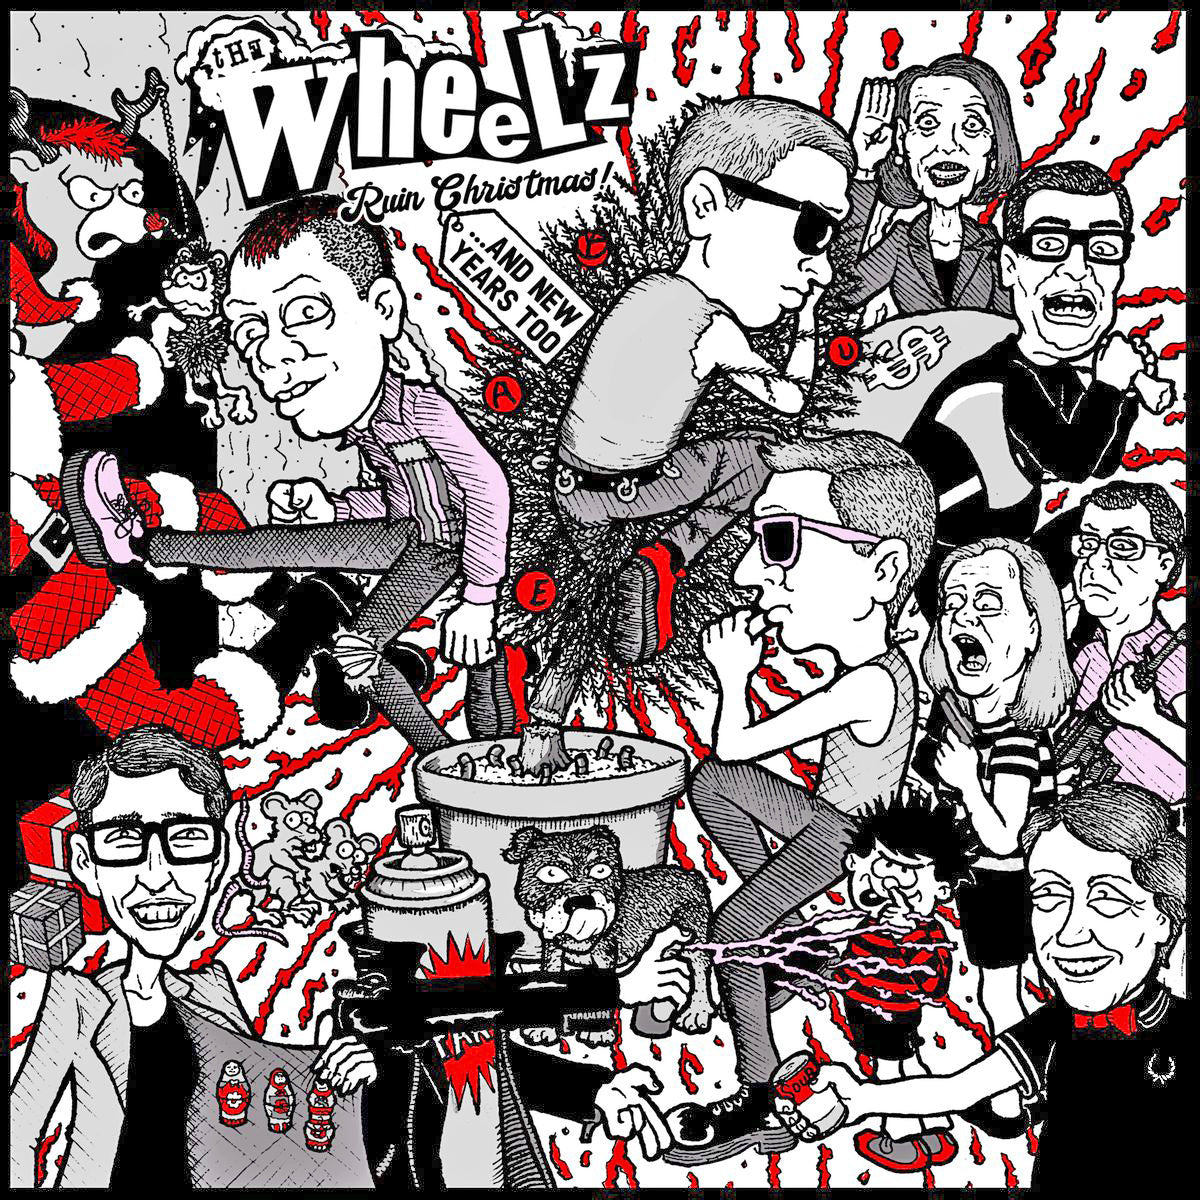 Wheelz- Ruin Christmas 7" ~RARE CLEAR WAX W/ NEON GREEN WHEELZ CHRISTMAS ORNAMENT LTD TO 100!